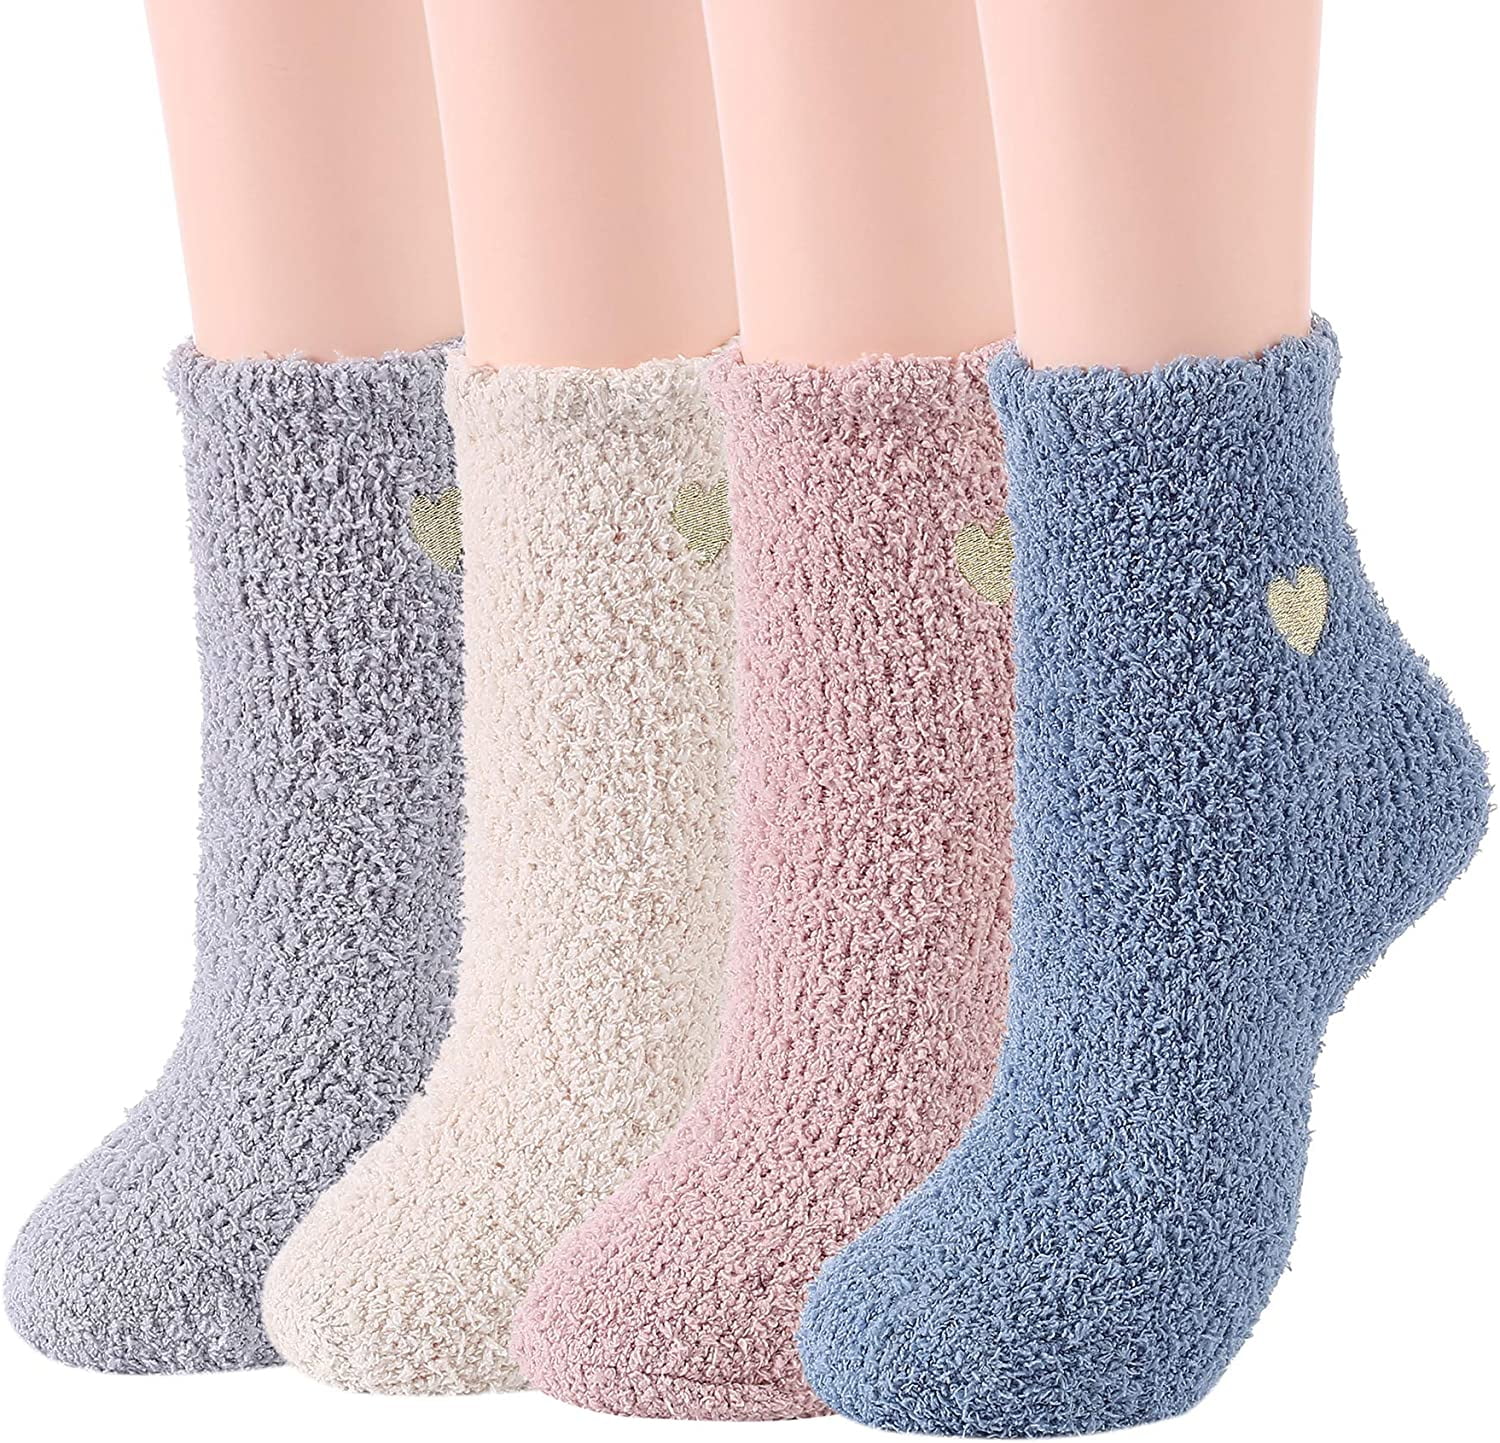 Winter Fuzzy Socks For Women Plush Slipper Socks Thick Cozy Fuzzy Socks 5 Pairs Knitting Warm Fluffy Crew Socks